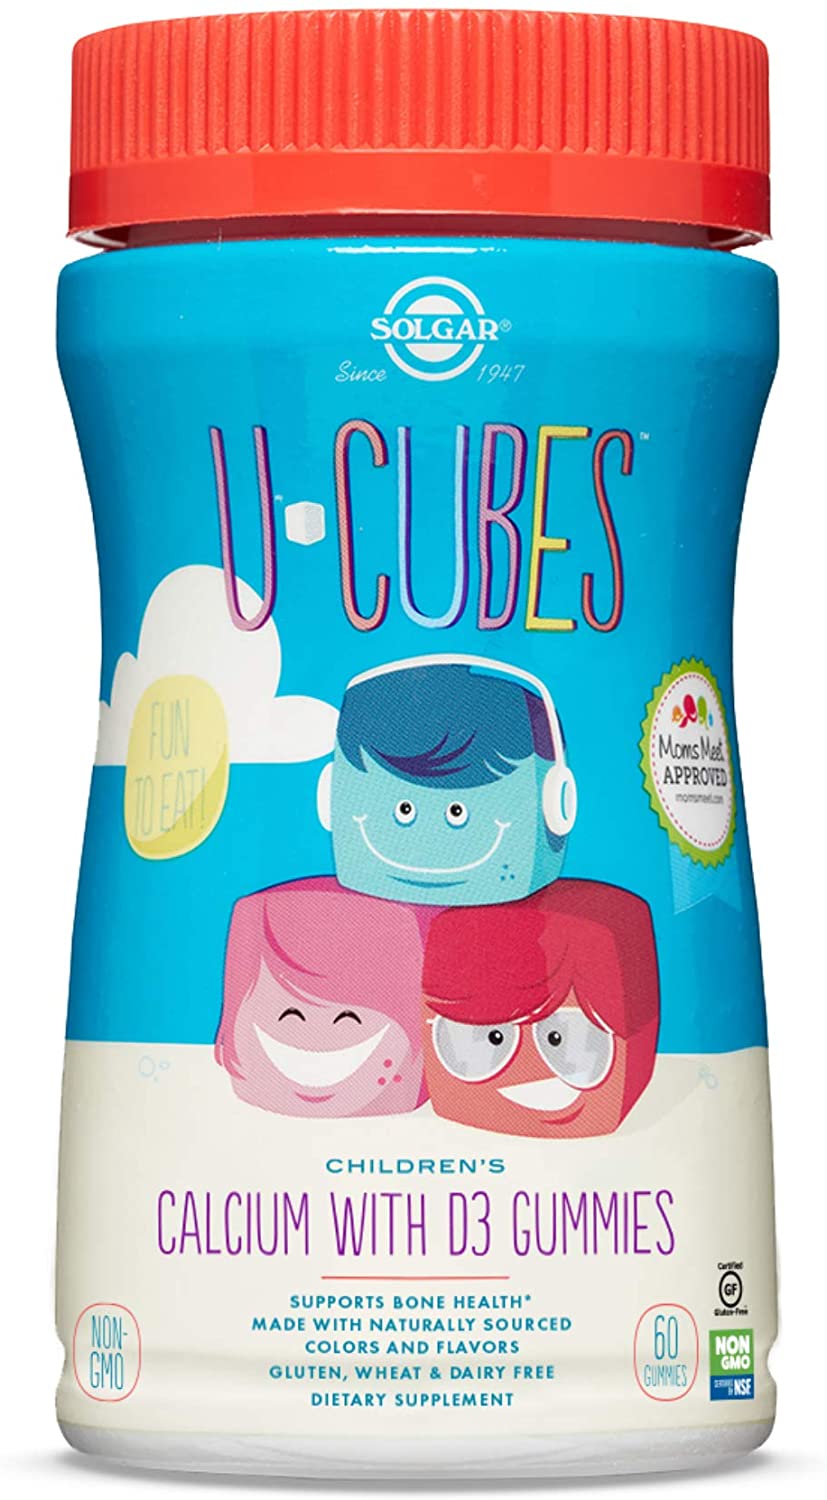 Solgar U-Cubes Children's Calcium With Vitamin D3, 60 Gummies - 3 Flavors, Pink Lemonade, Blueberry & Strawberry - Supports Bone & Teeth Health - Non GMO, Gluten Free, Dairy Free - 30 Servings